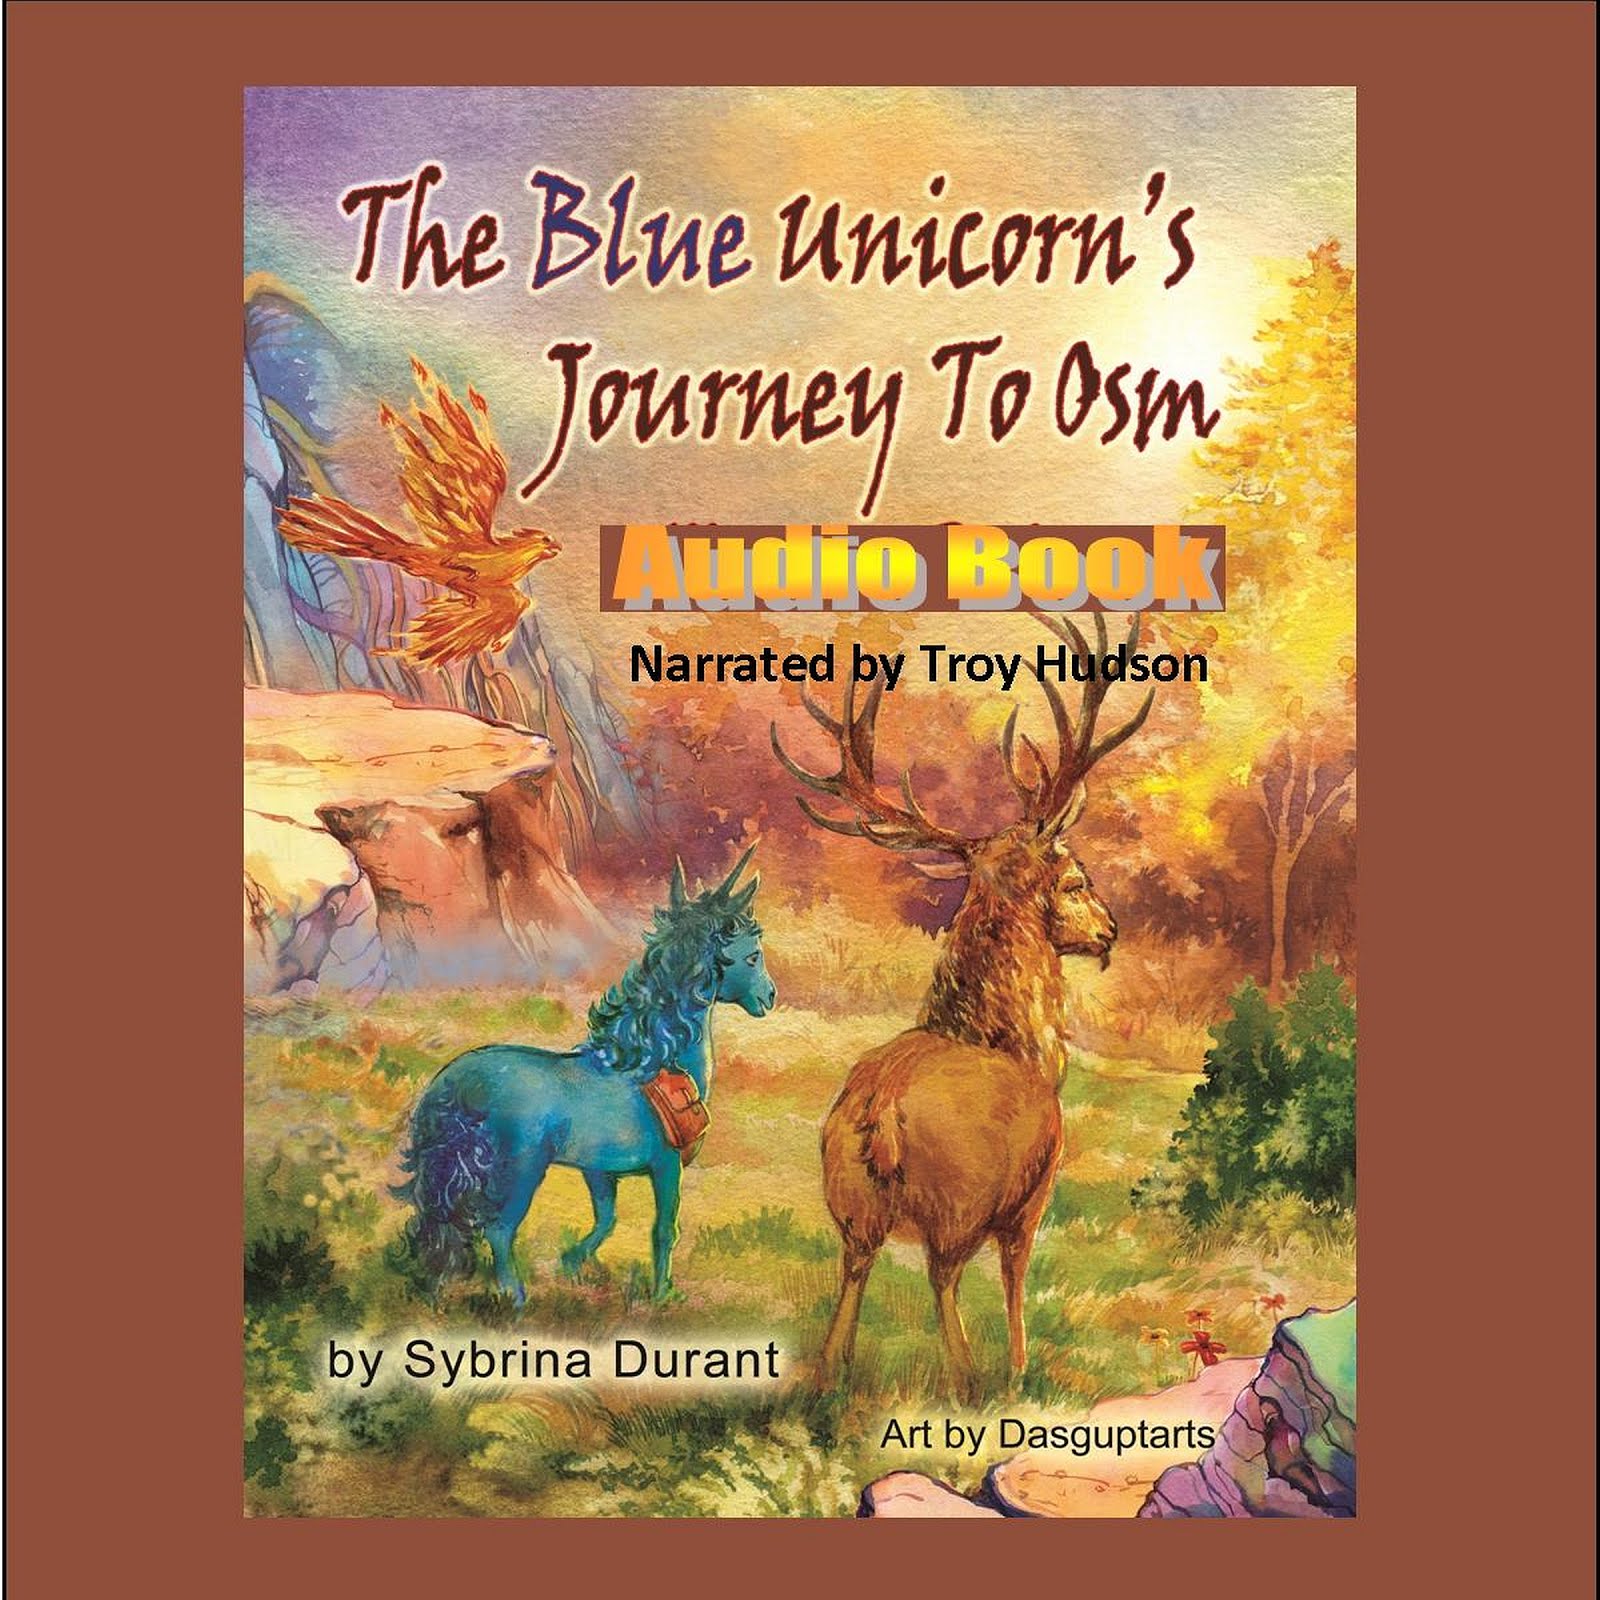 Audio Book - The Blue Unicorn's Journey To Osm